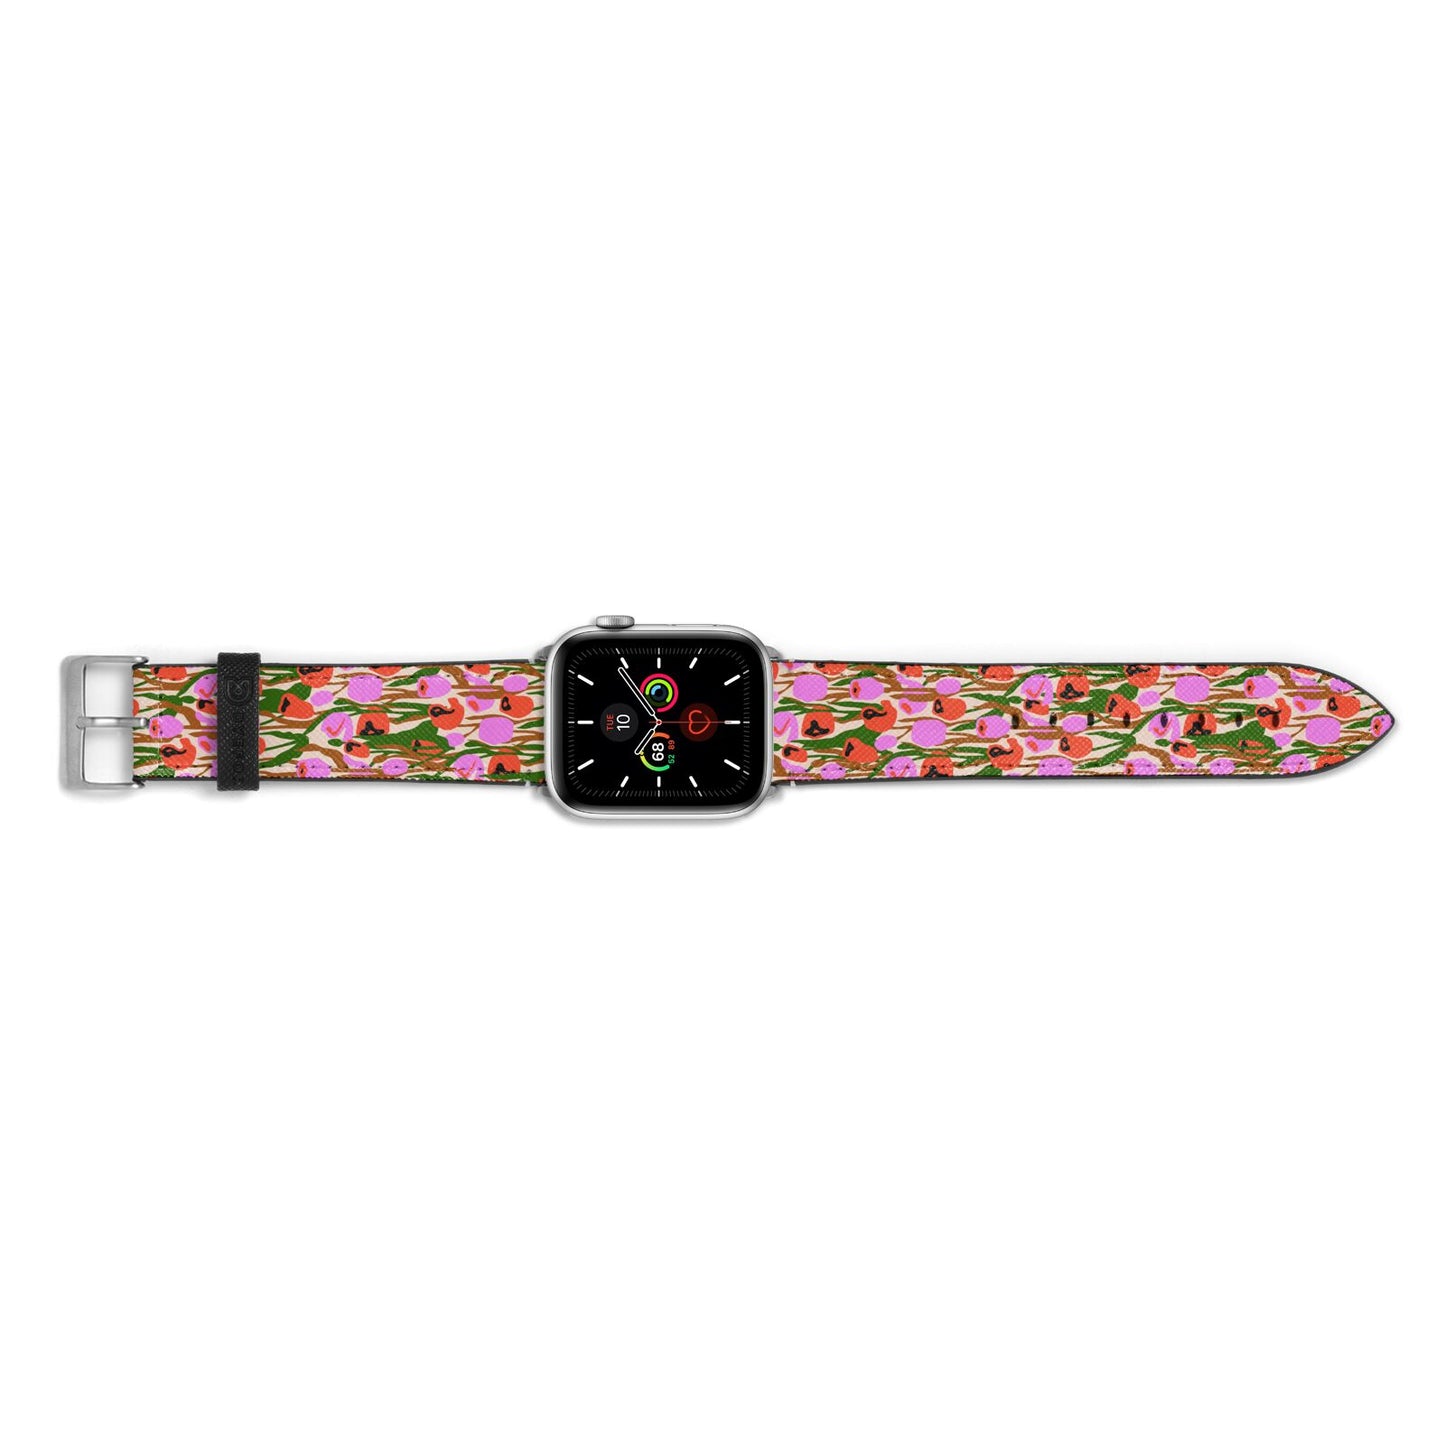 Floral Apple Watch Strap Landscape Image Silver Hardware